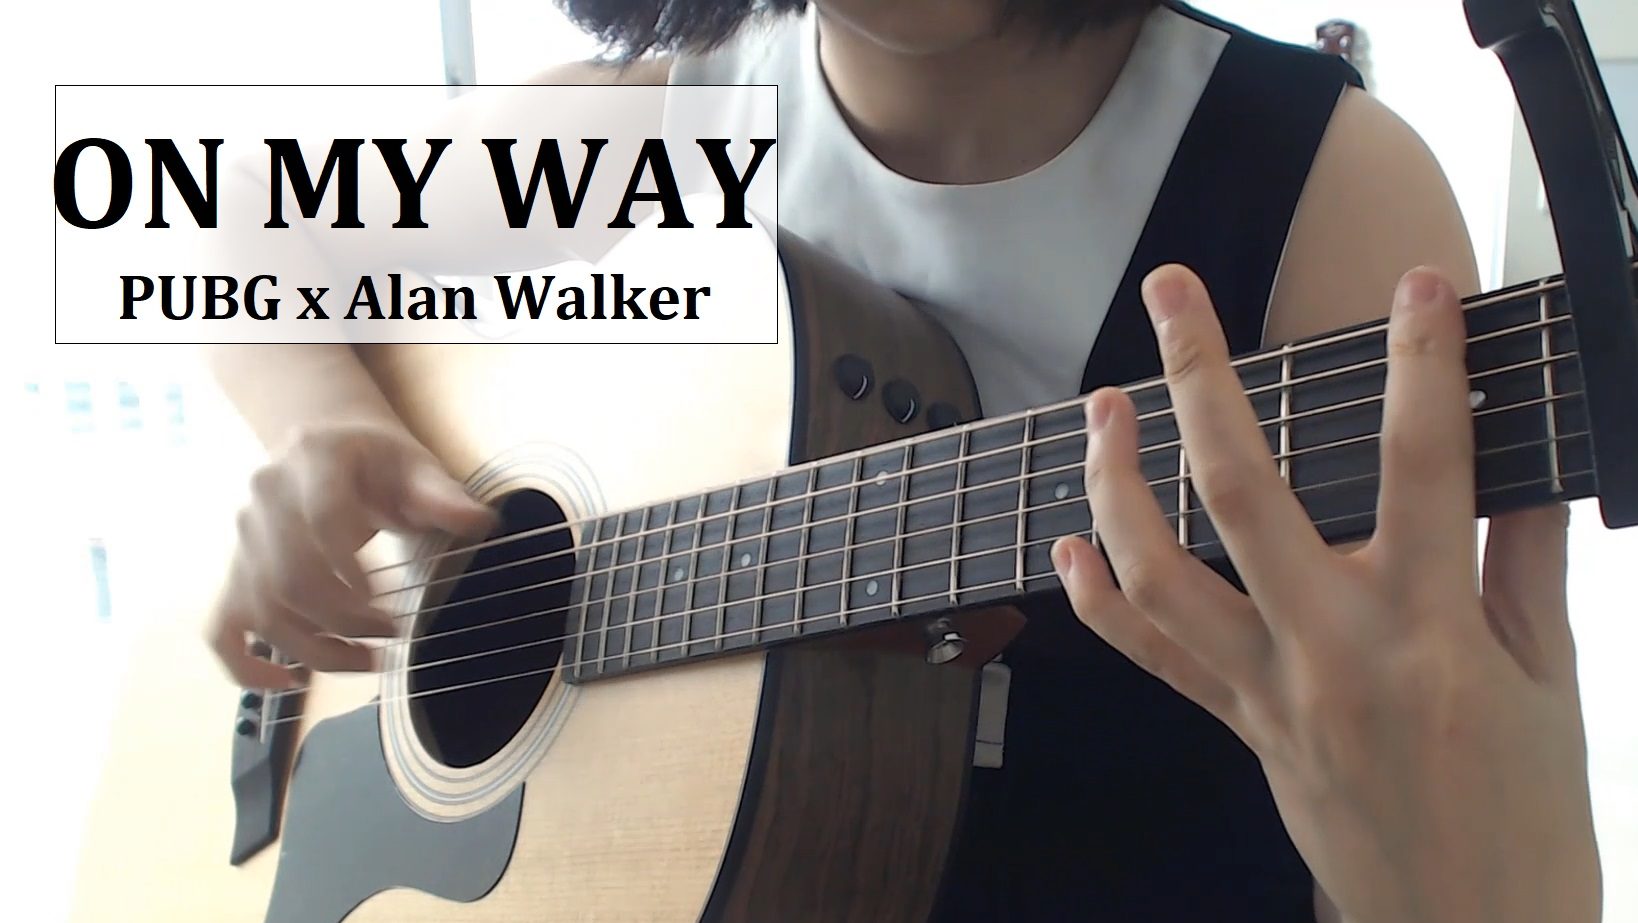 On my way alan. My ways певец. On my way Guitar. Alan Walker on my way. On my way.